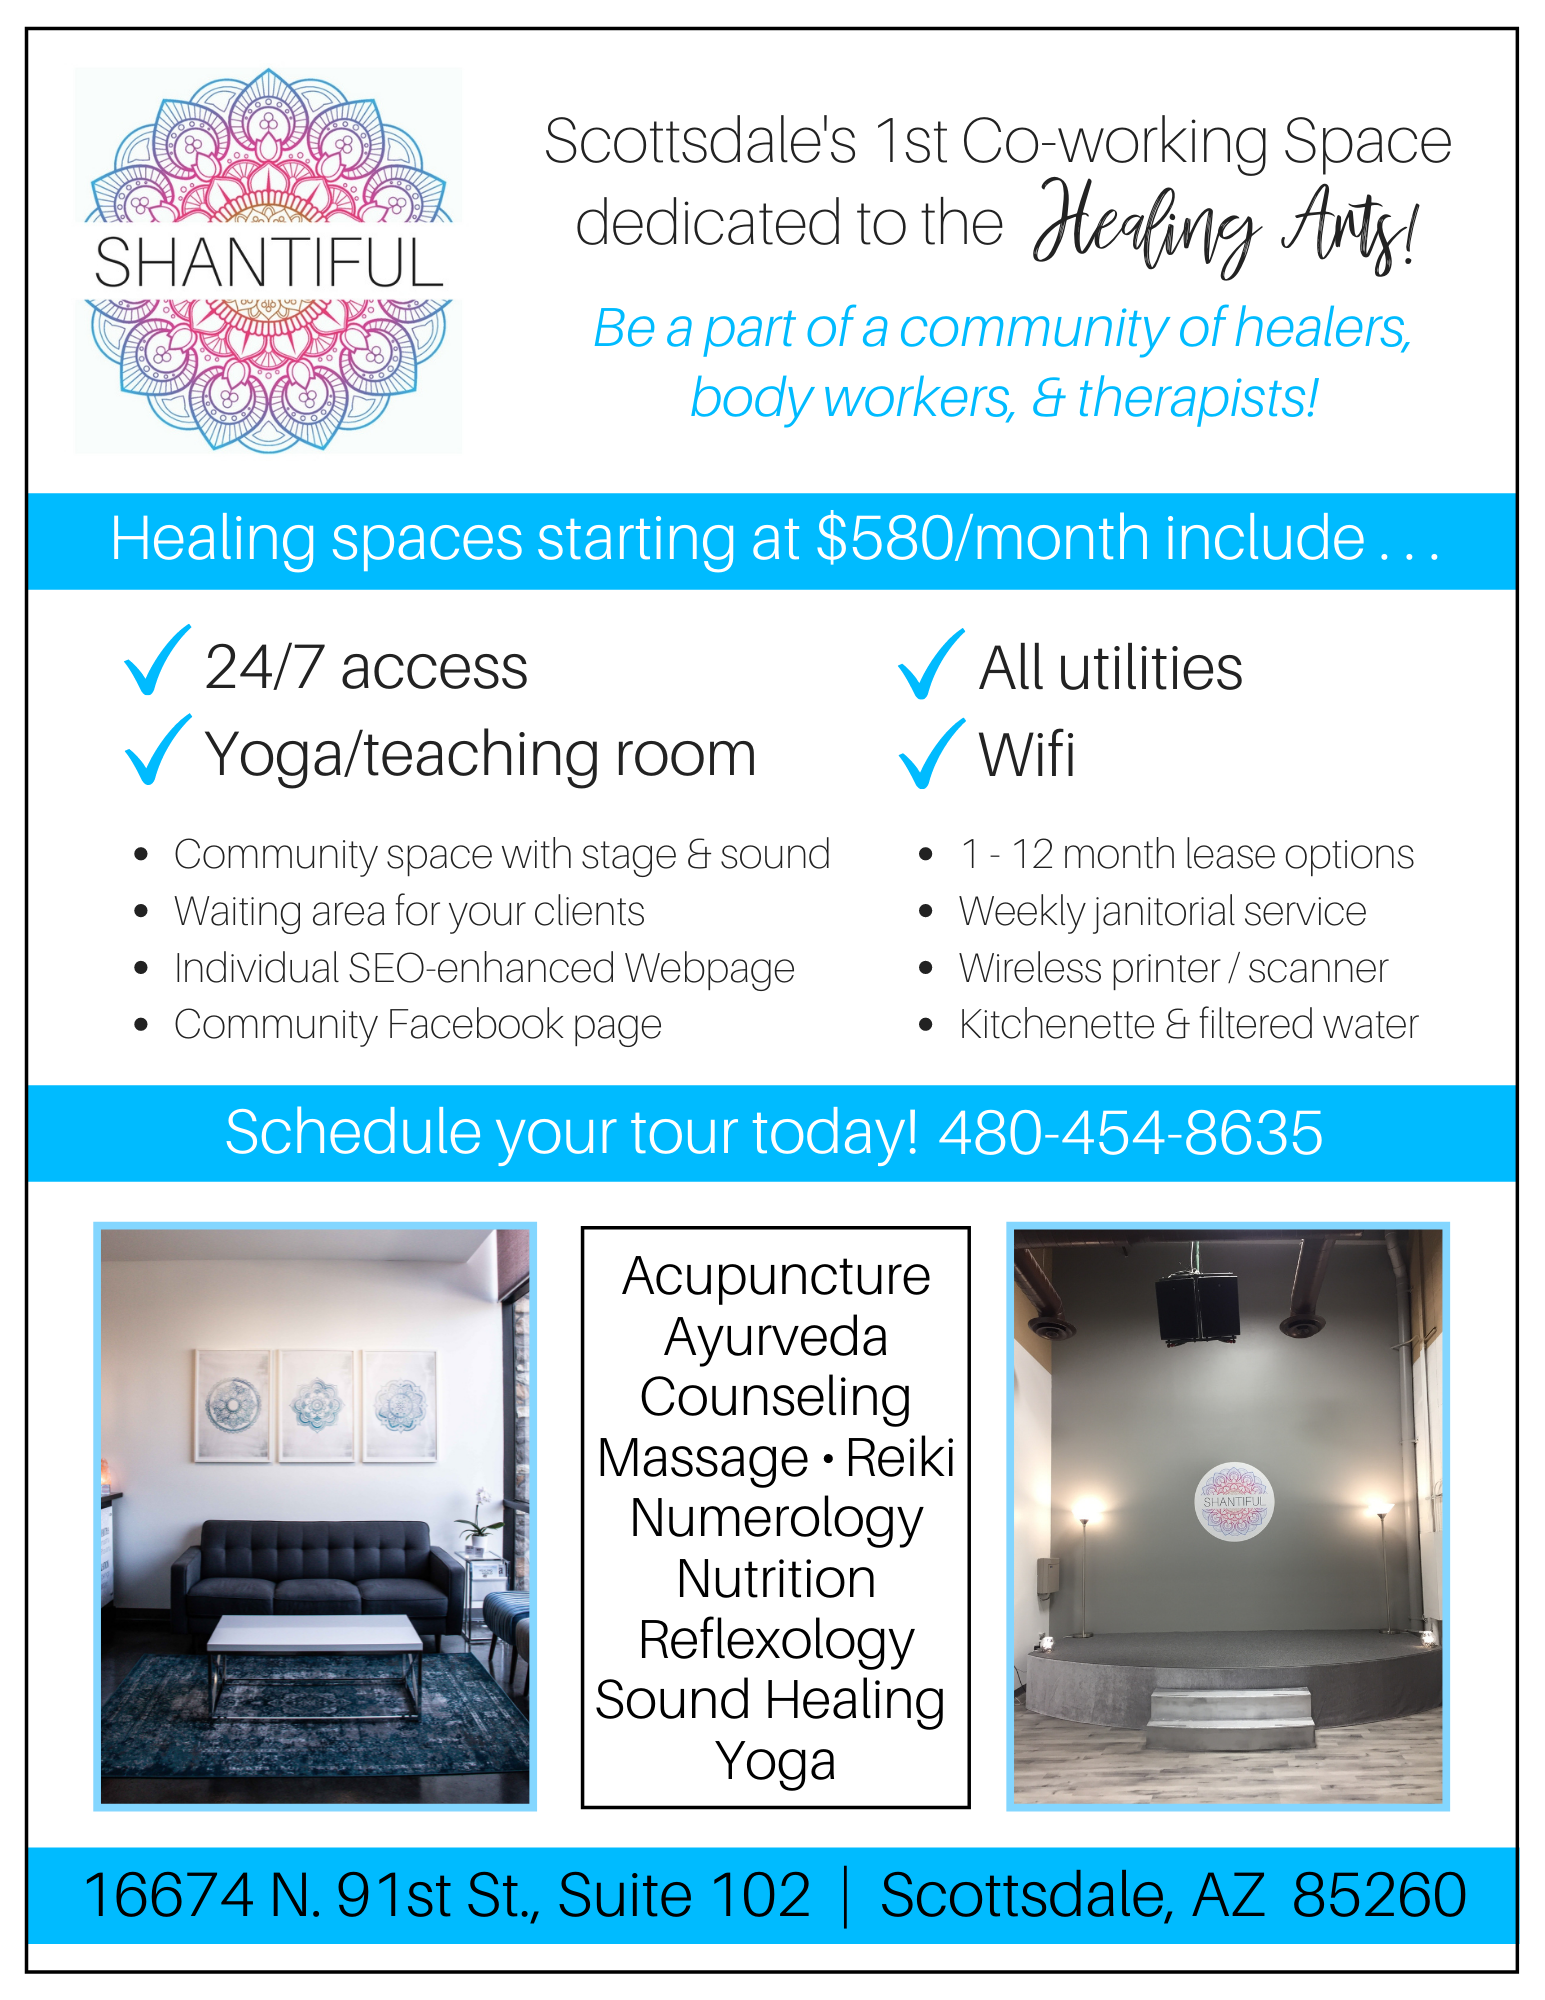 SHANTIFUL, a co-working space dedicated to the Healing Arts!